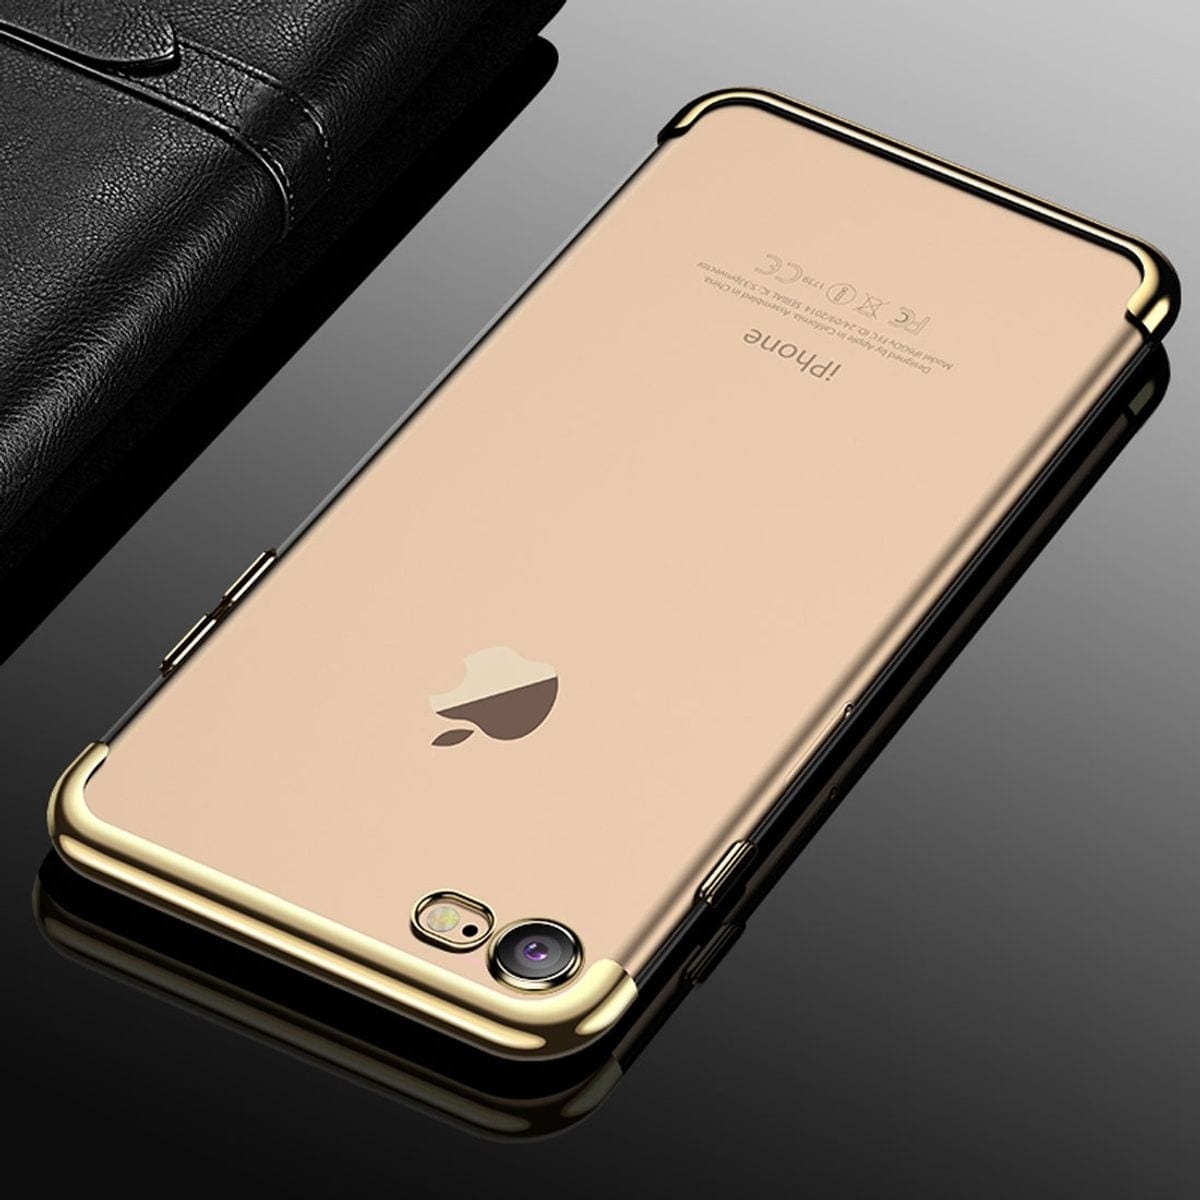 König Design Apple IPhone 7 Hülle Case Handy Cover Schutz Tasche Schutzhülle Bumper Etui Gold (iPhone SE (2020), iPhone 8, iPhone 7), Smartphone Hülle, Gold